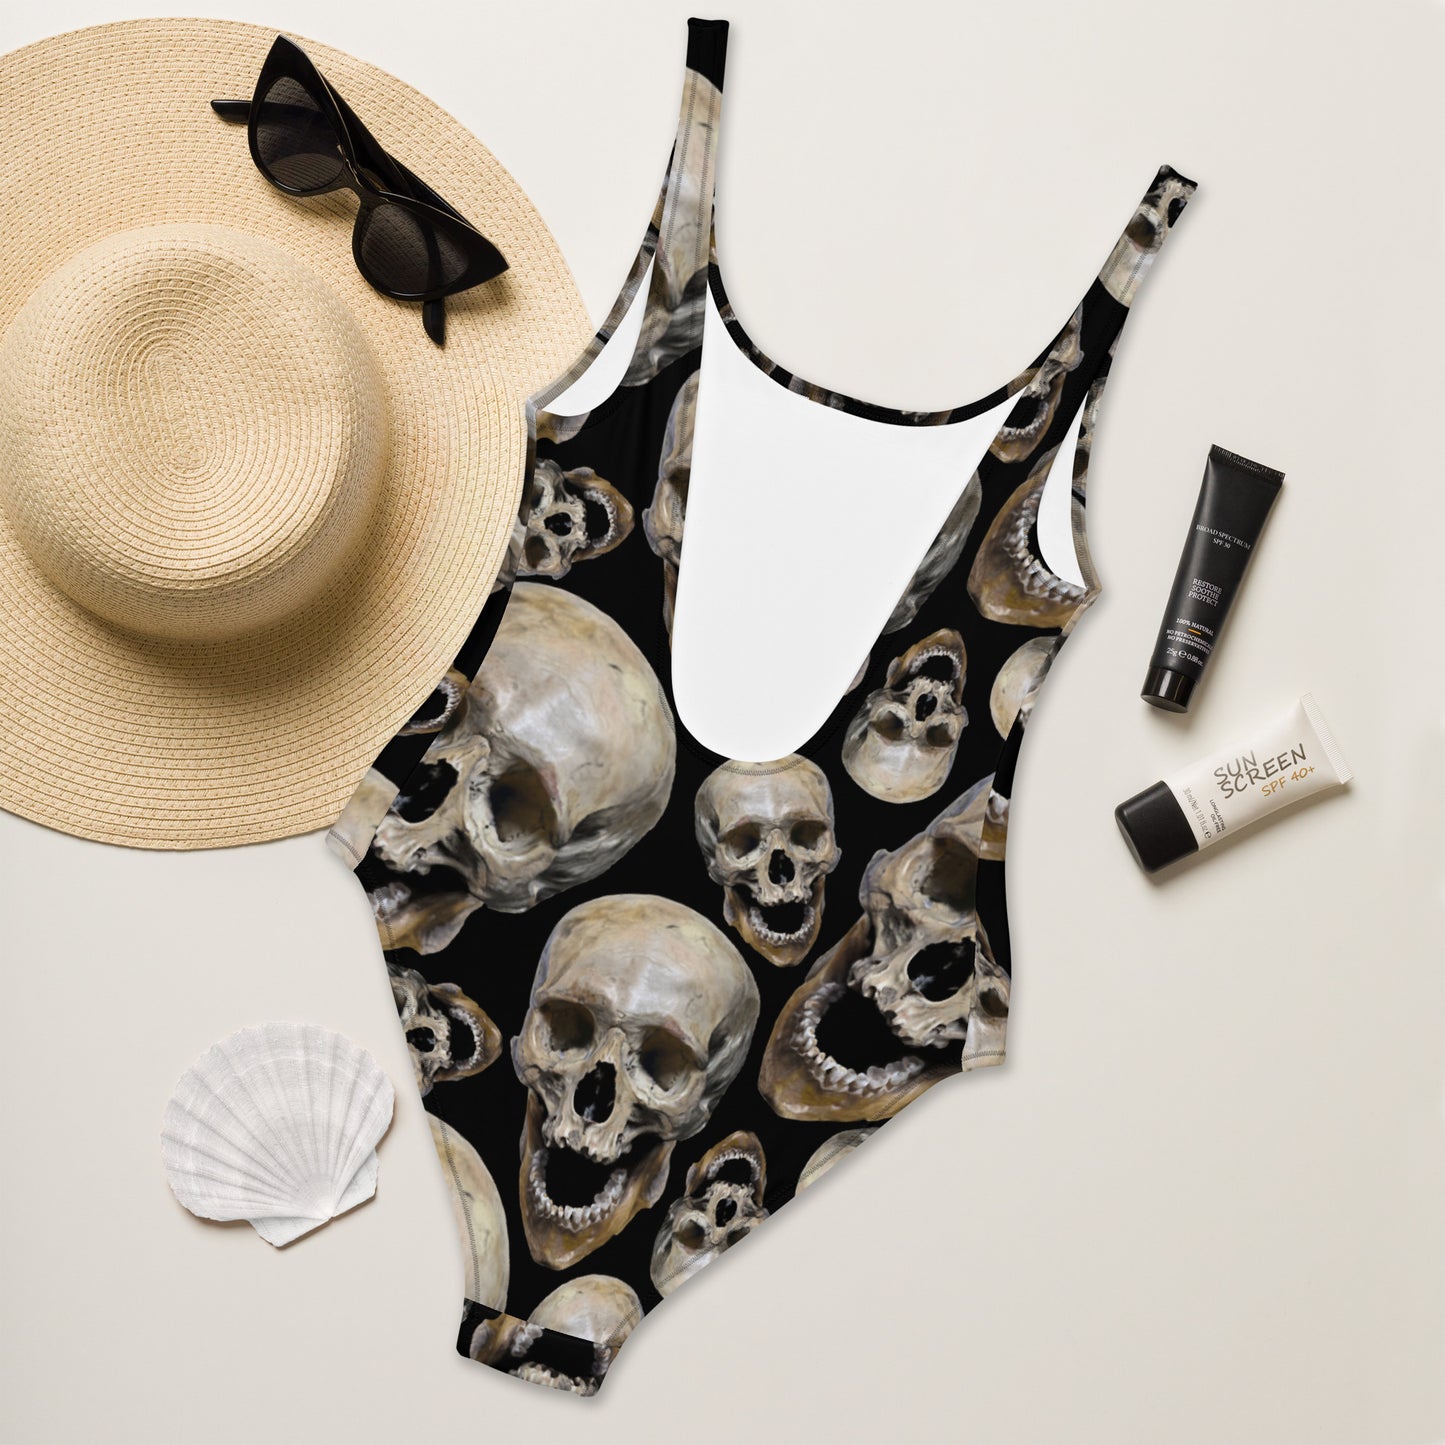 Skull One-Piece Swimsuit